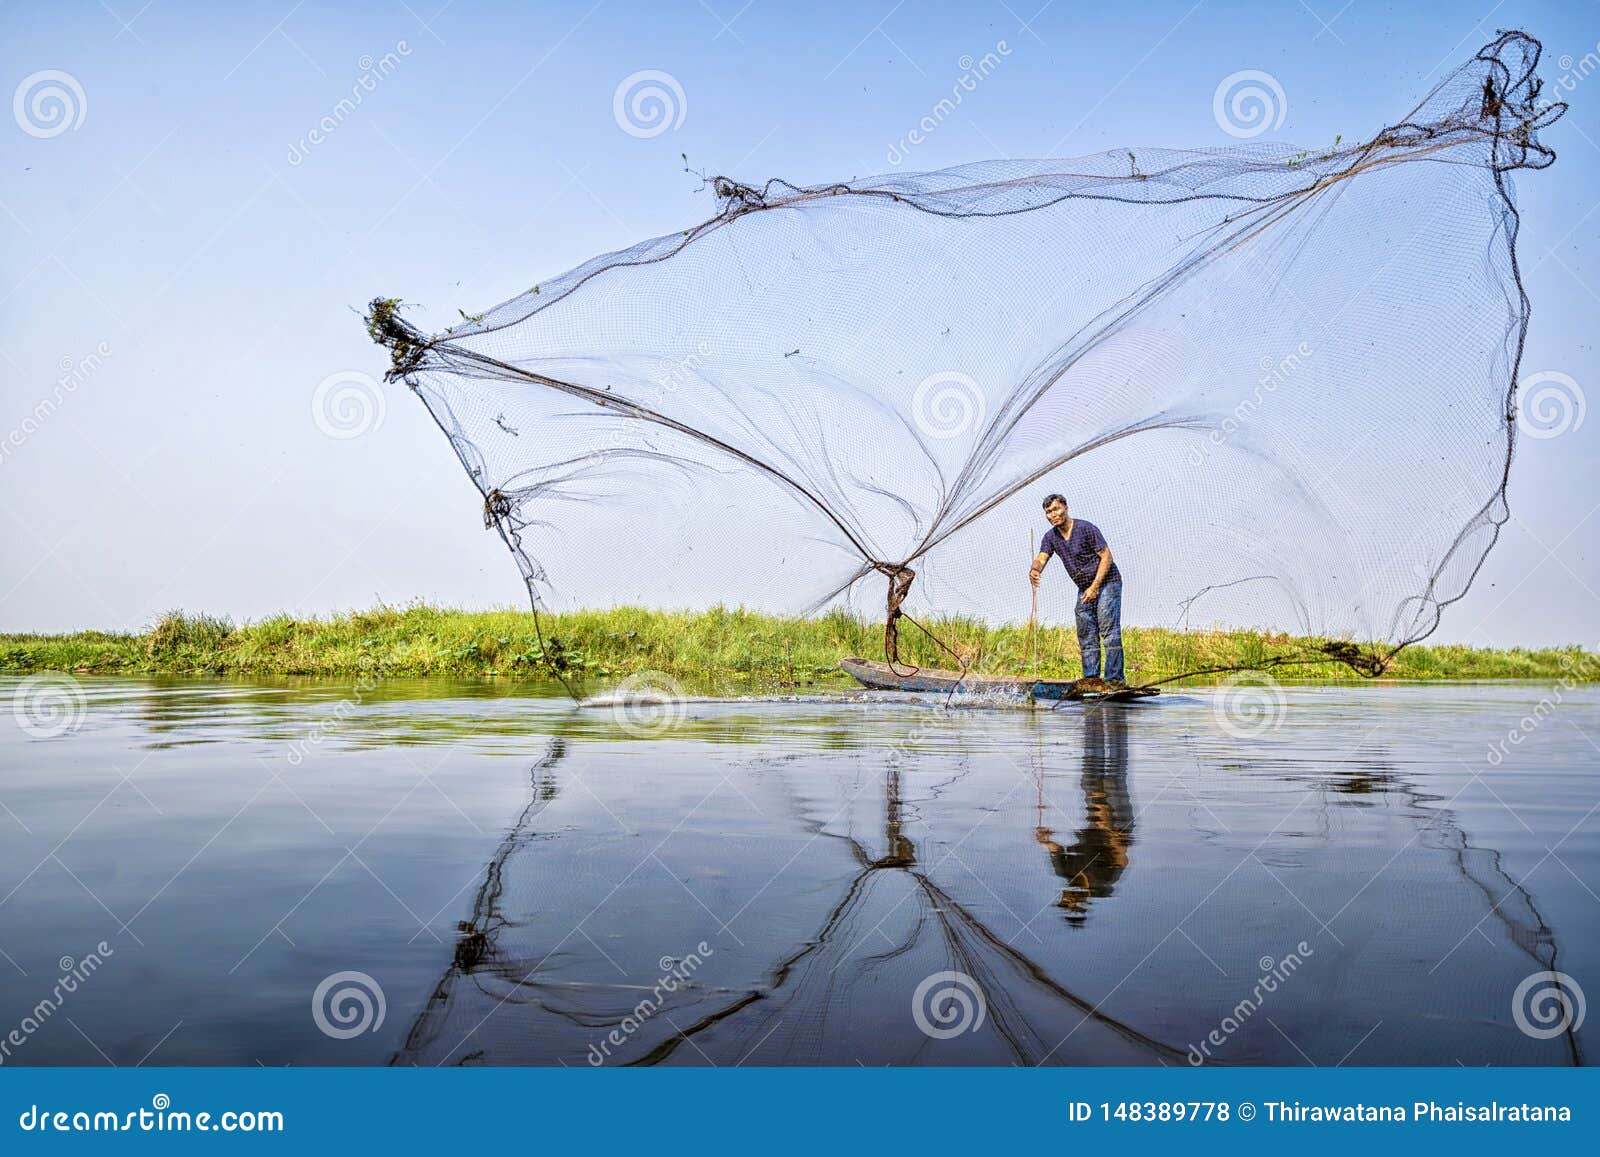 Villagers are Casting Fish. Fisherman Fishing Nets Stock Photo